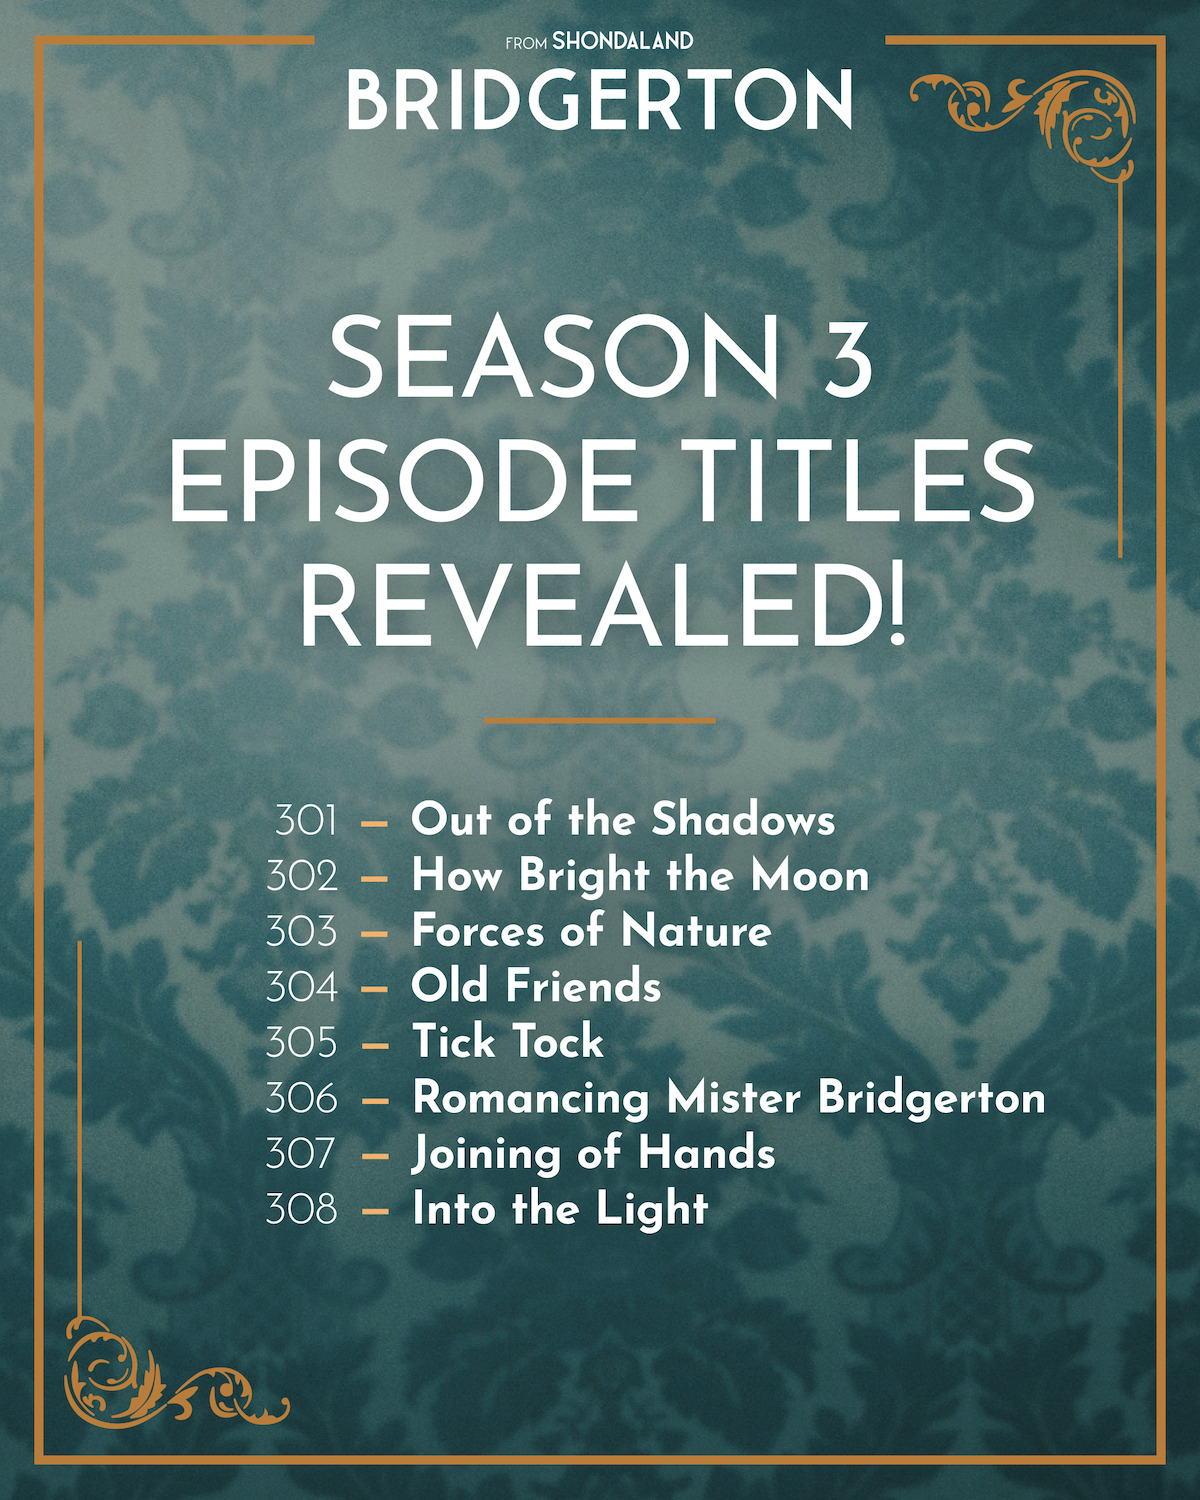 List of episode titles for season 3 of ‘Bridgerton’